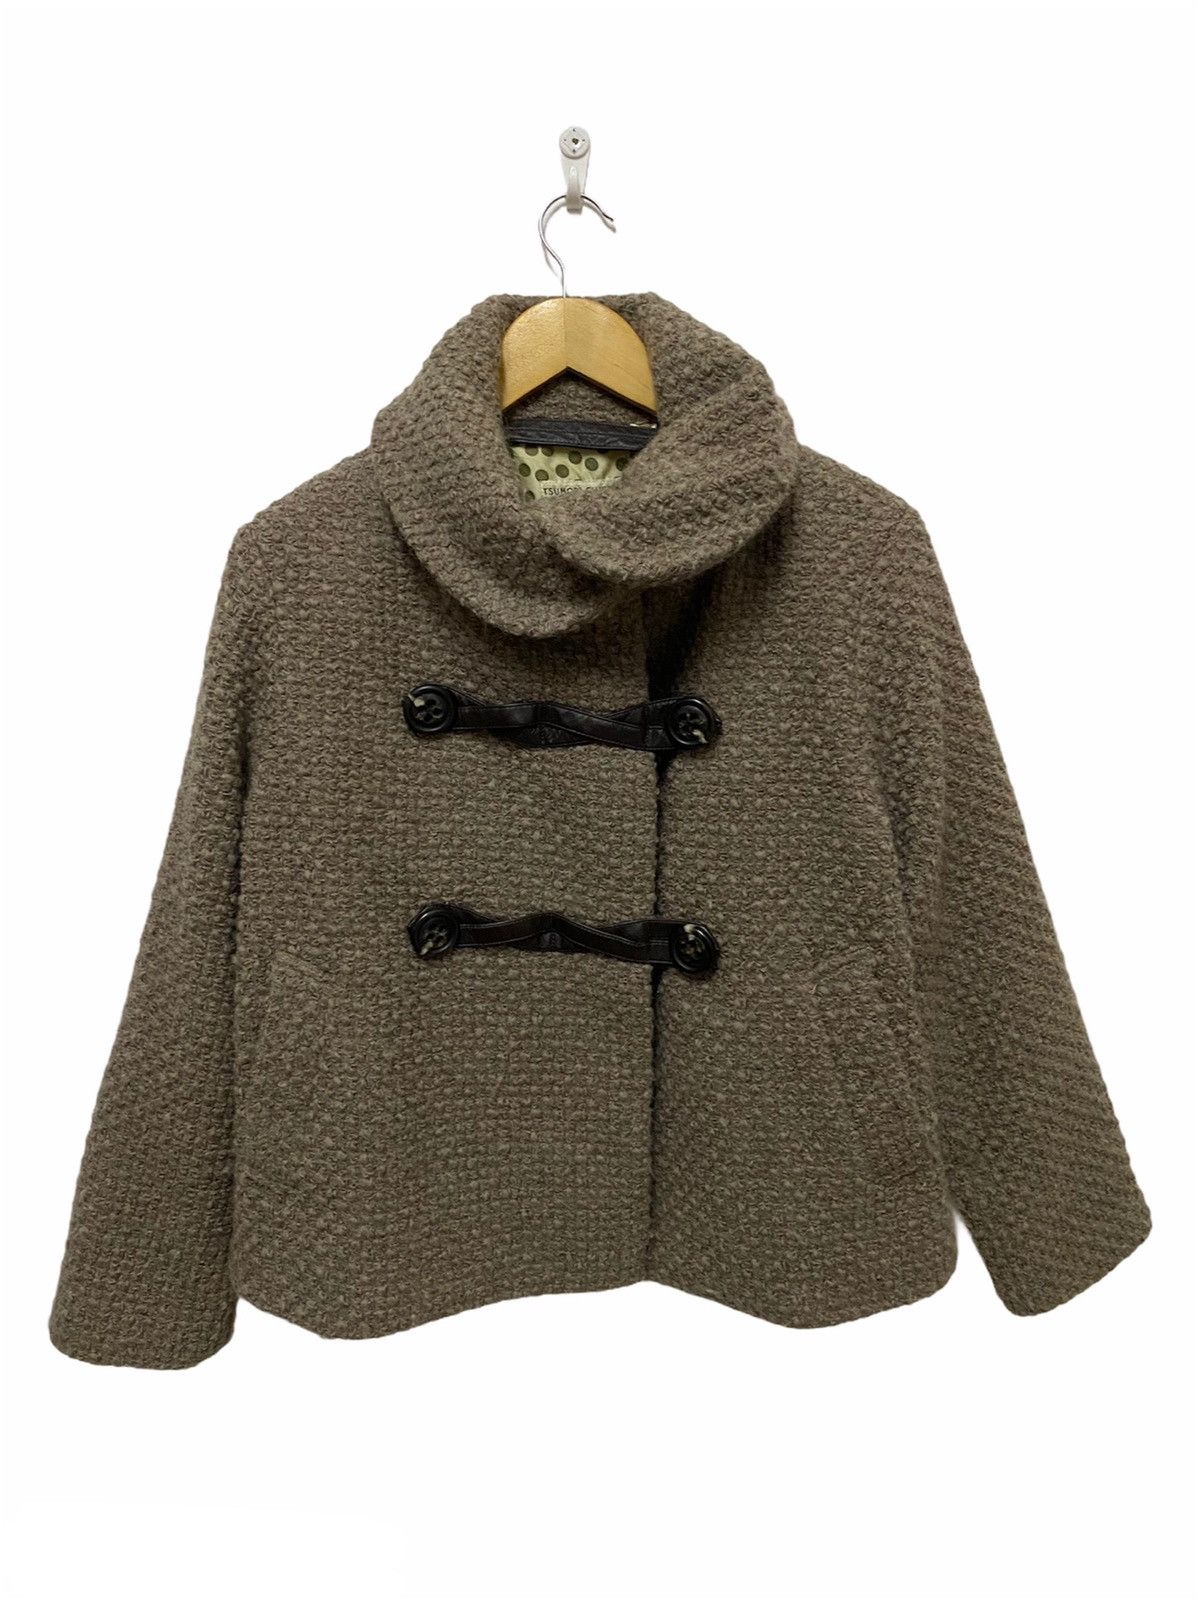 Tsumori Chisato Issey Miyake Wool Coat Jacket - 1